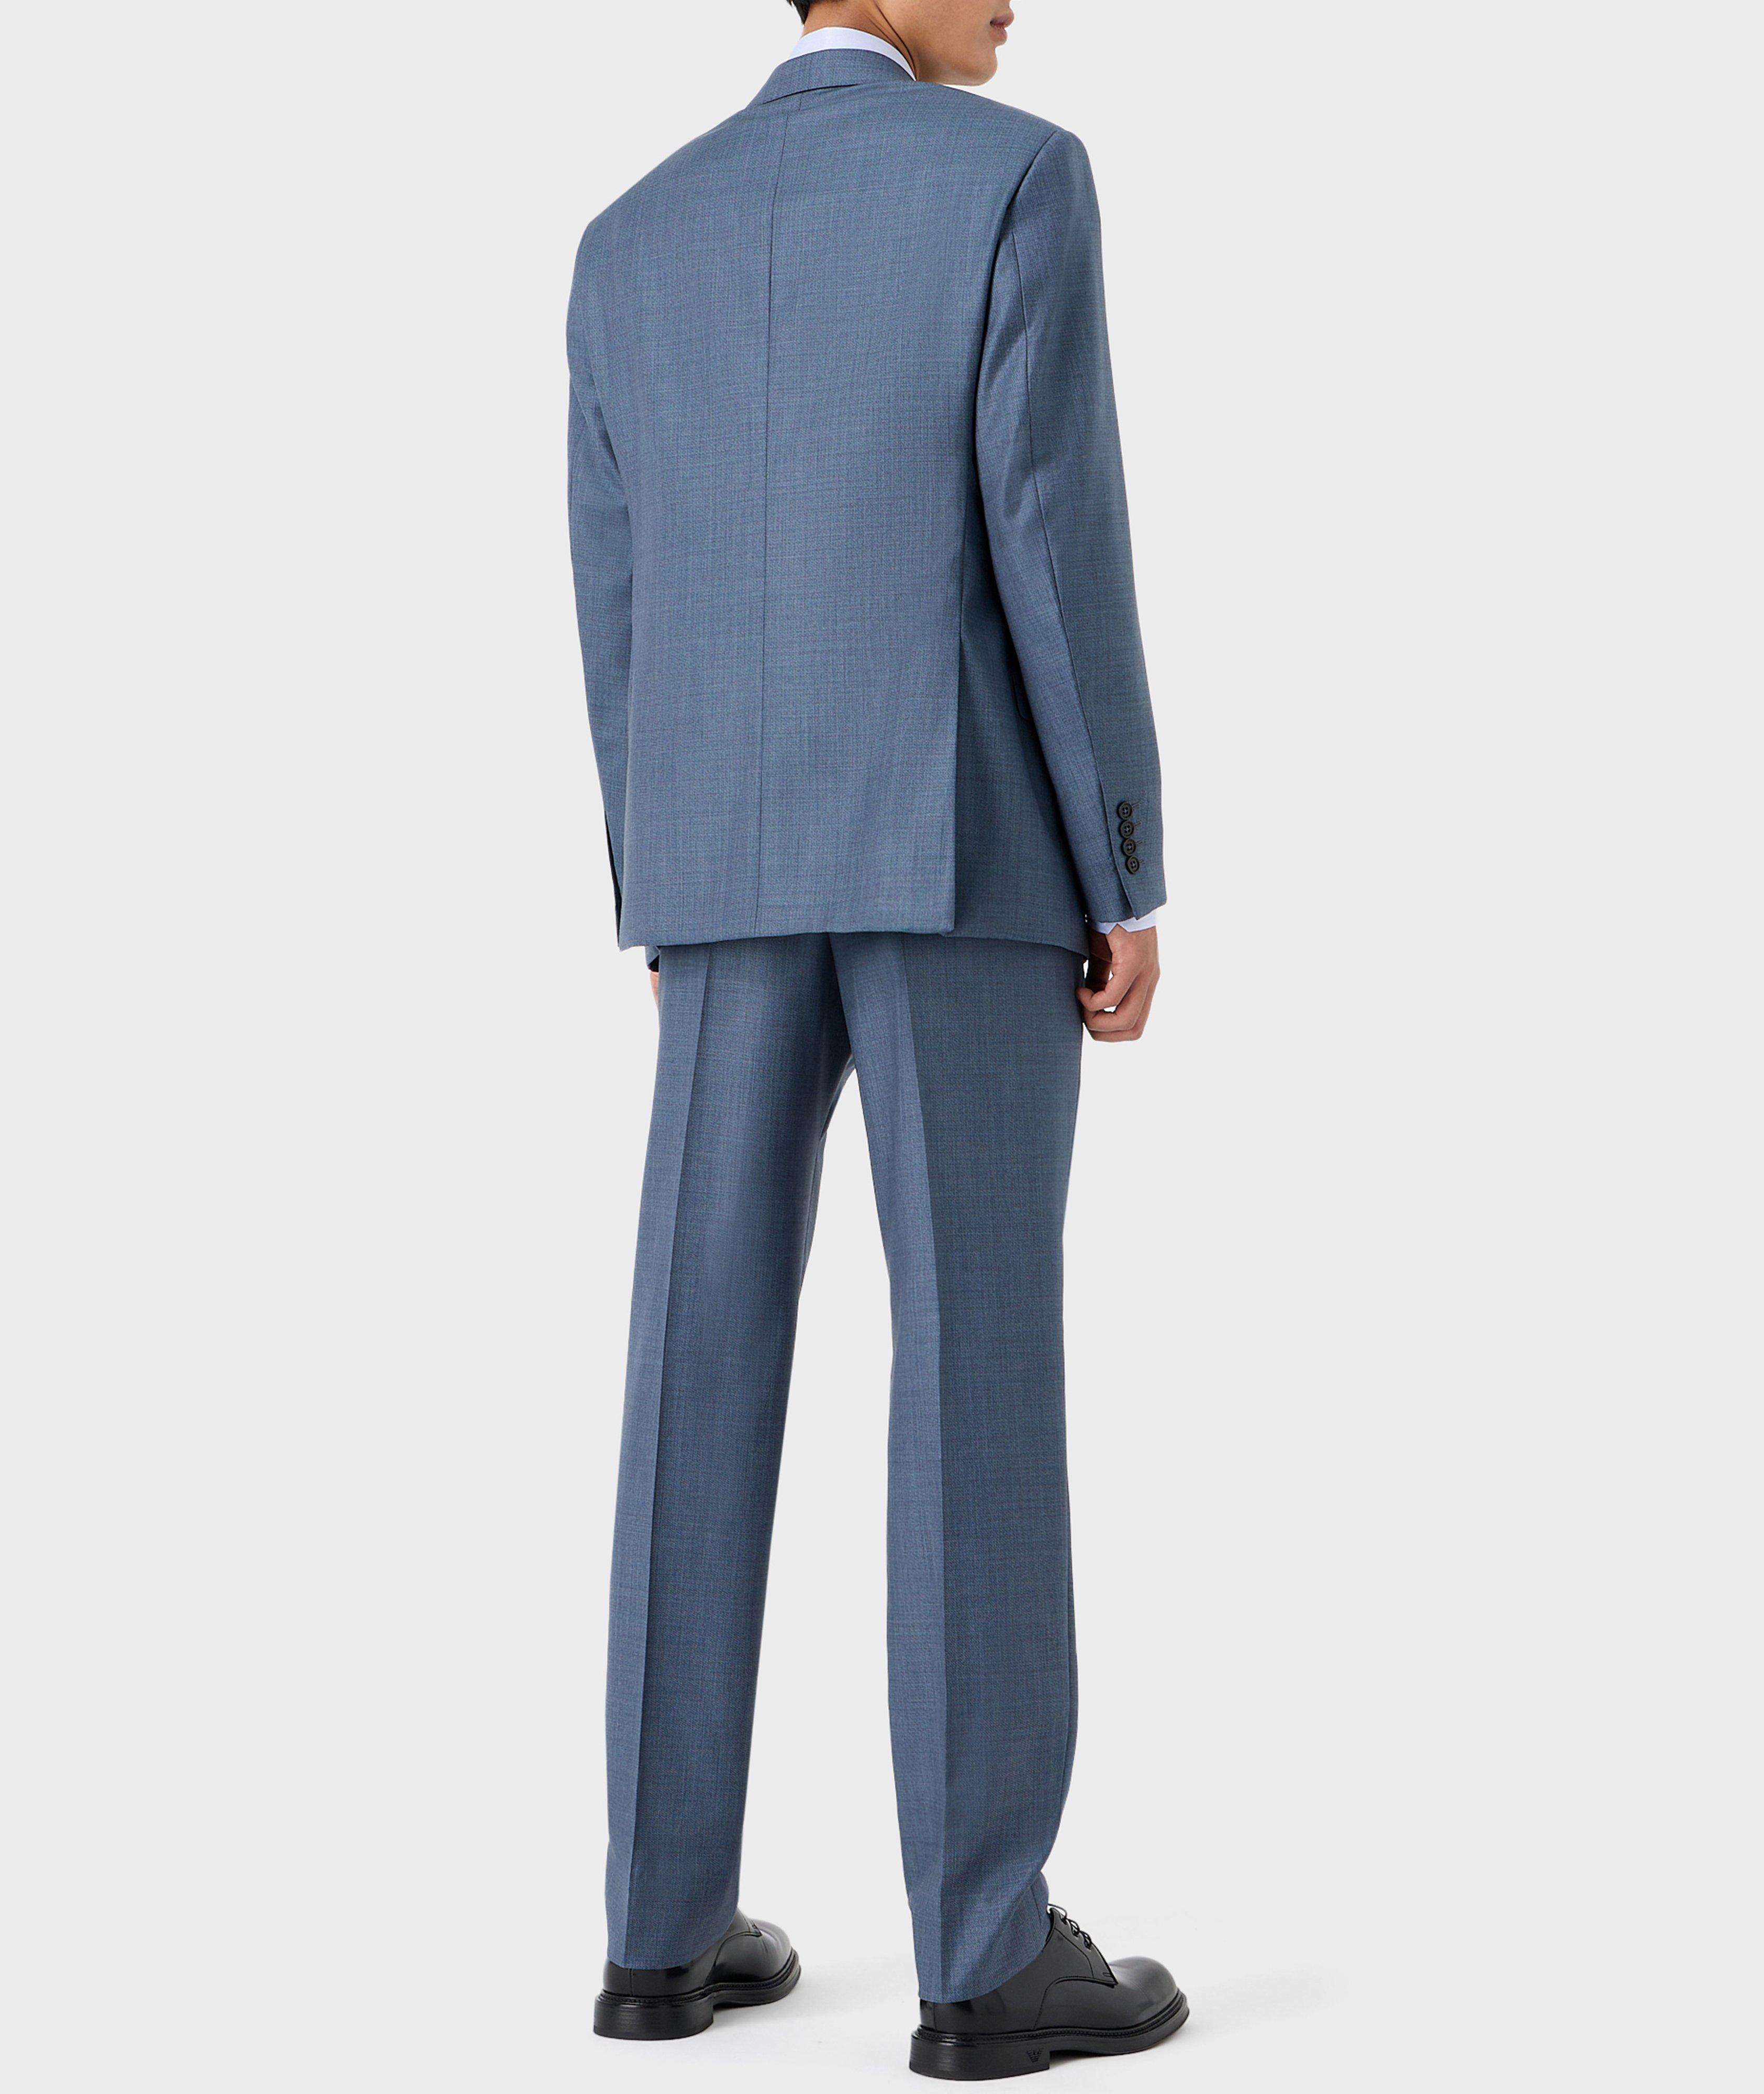 Pick Stitched G-Line Virgin Wool Suit image 2